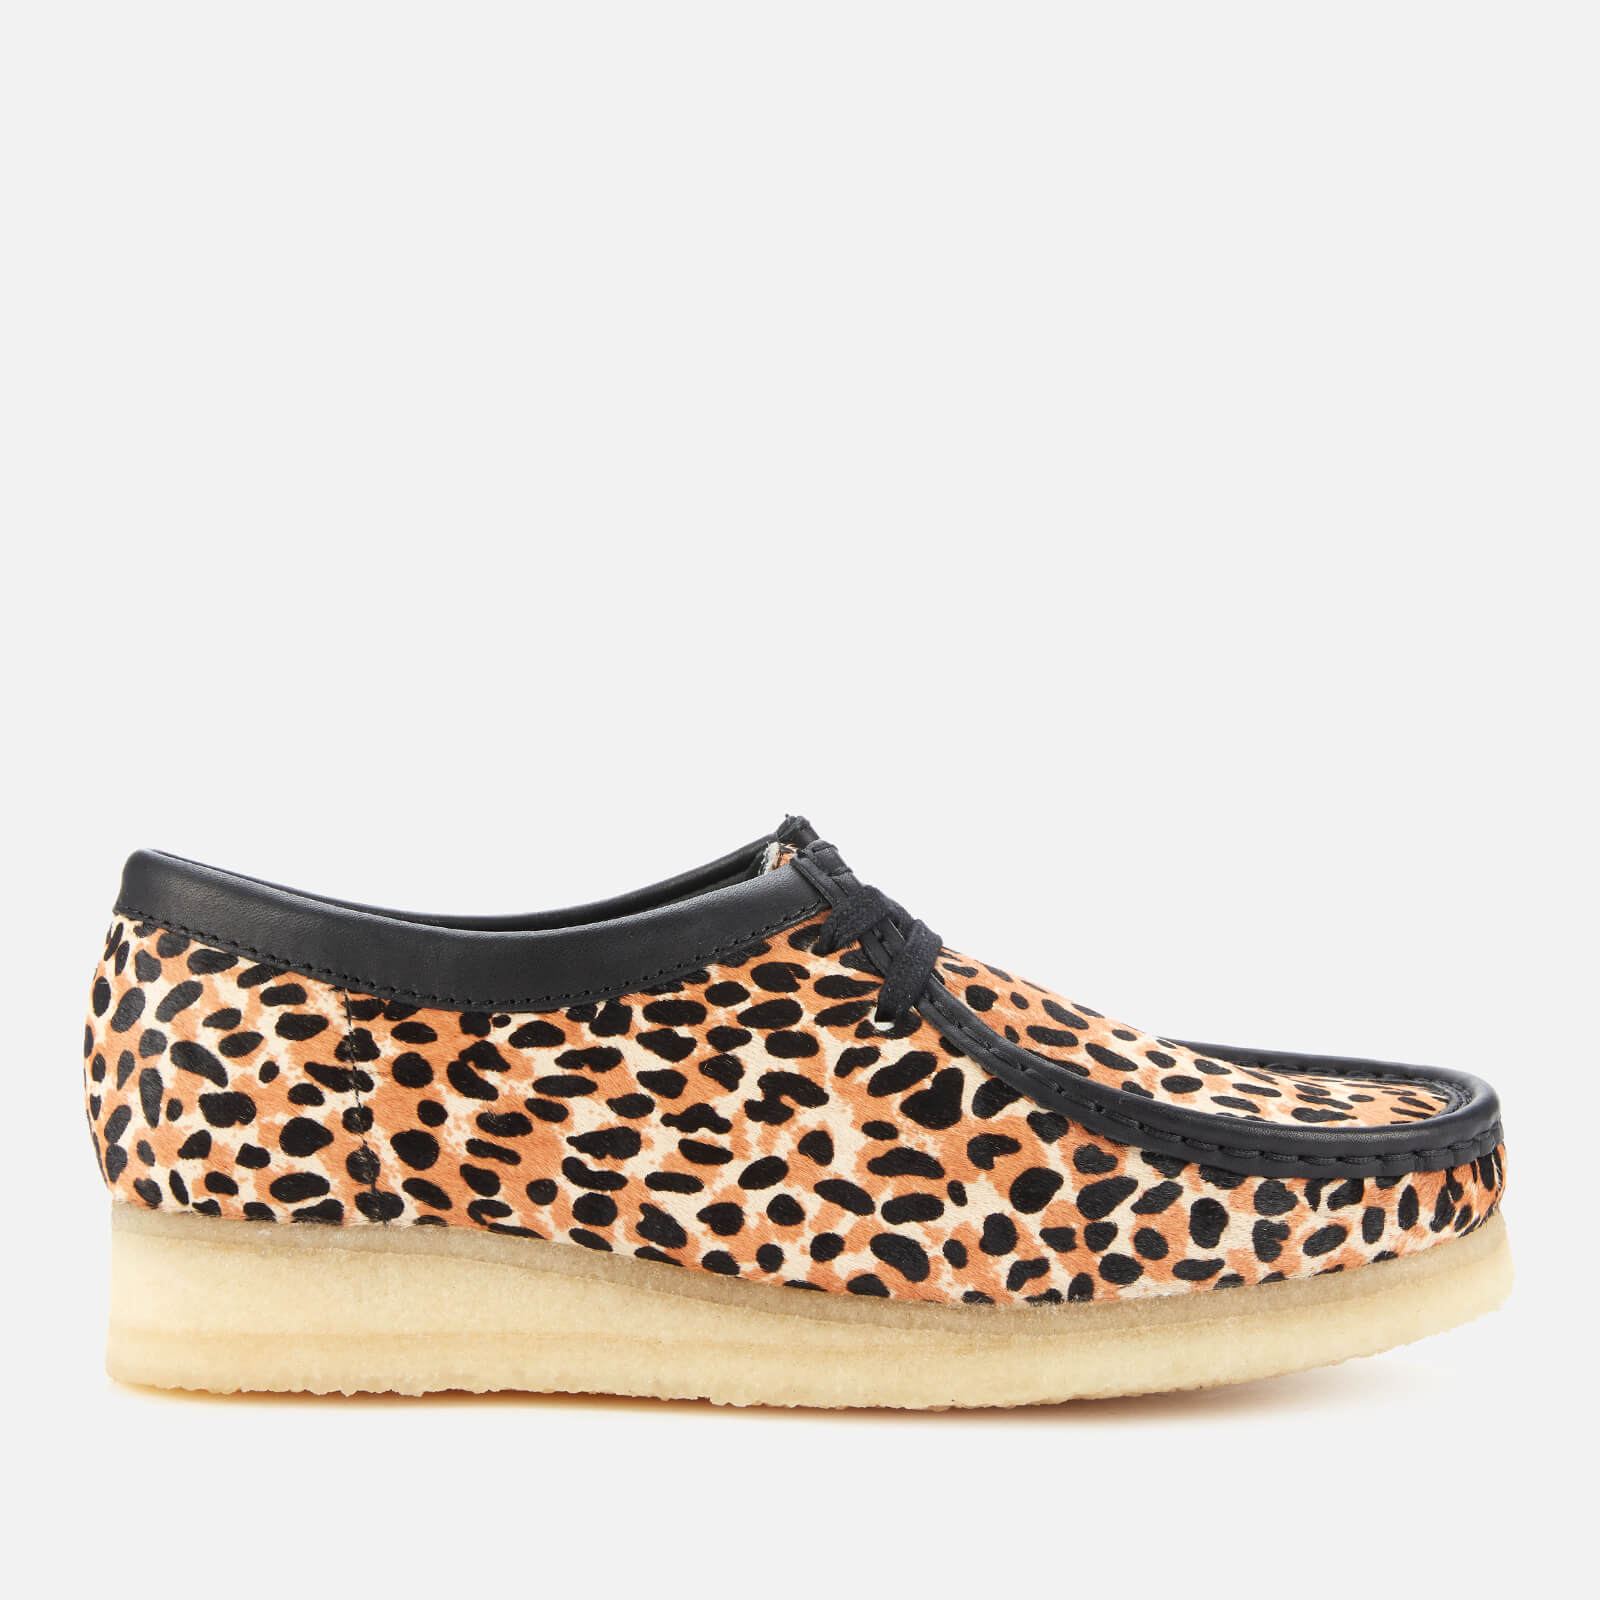 Clarks Original Women's Wallabee Suede Shoes - Leopard - UK 3